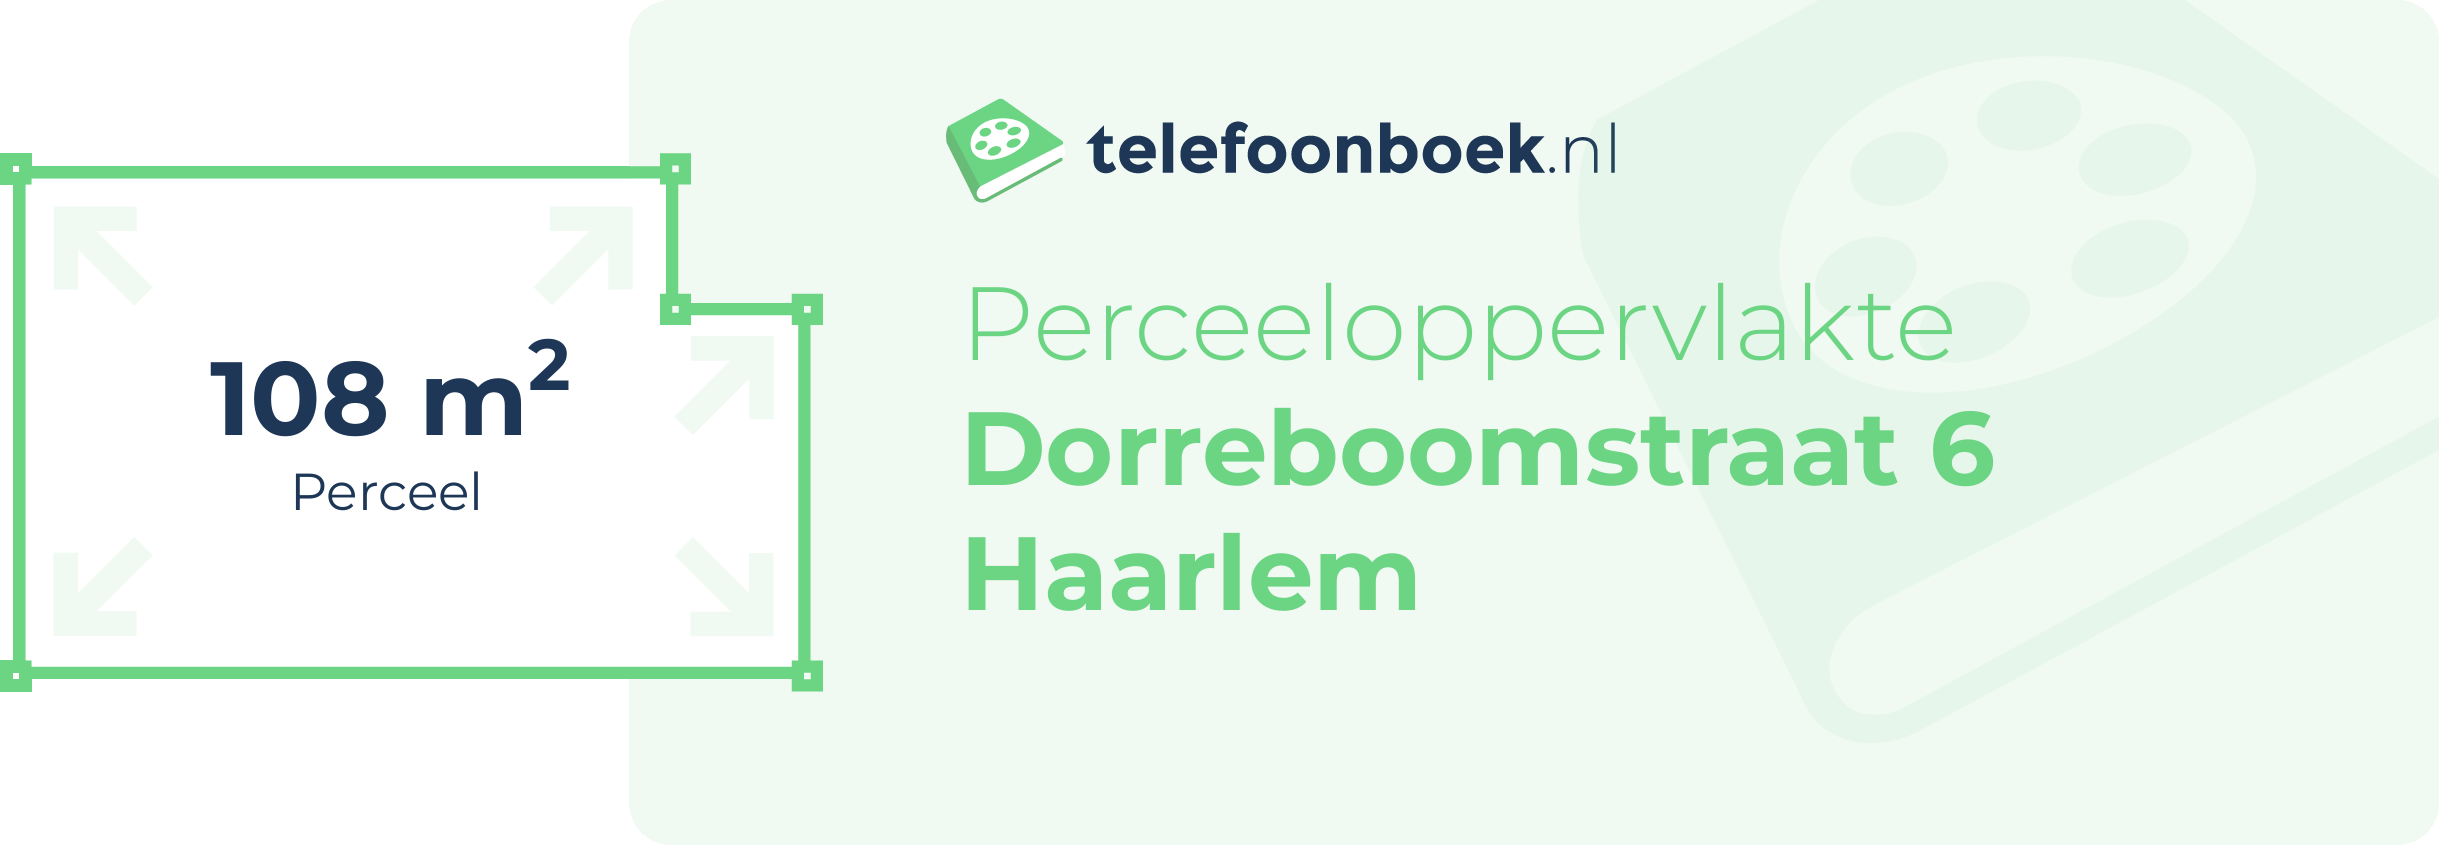 Perceeloppervlakte Dorreboomstraat 6 Haarlem